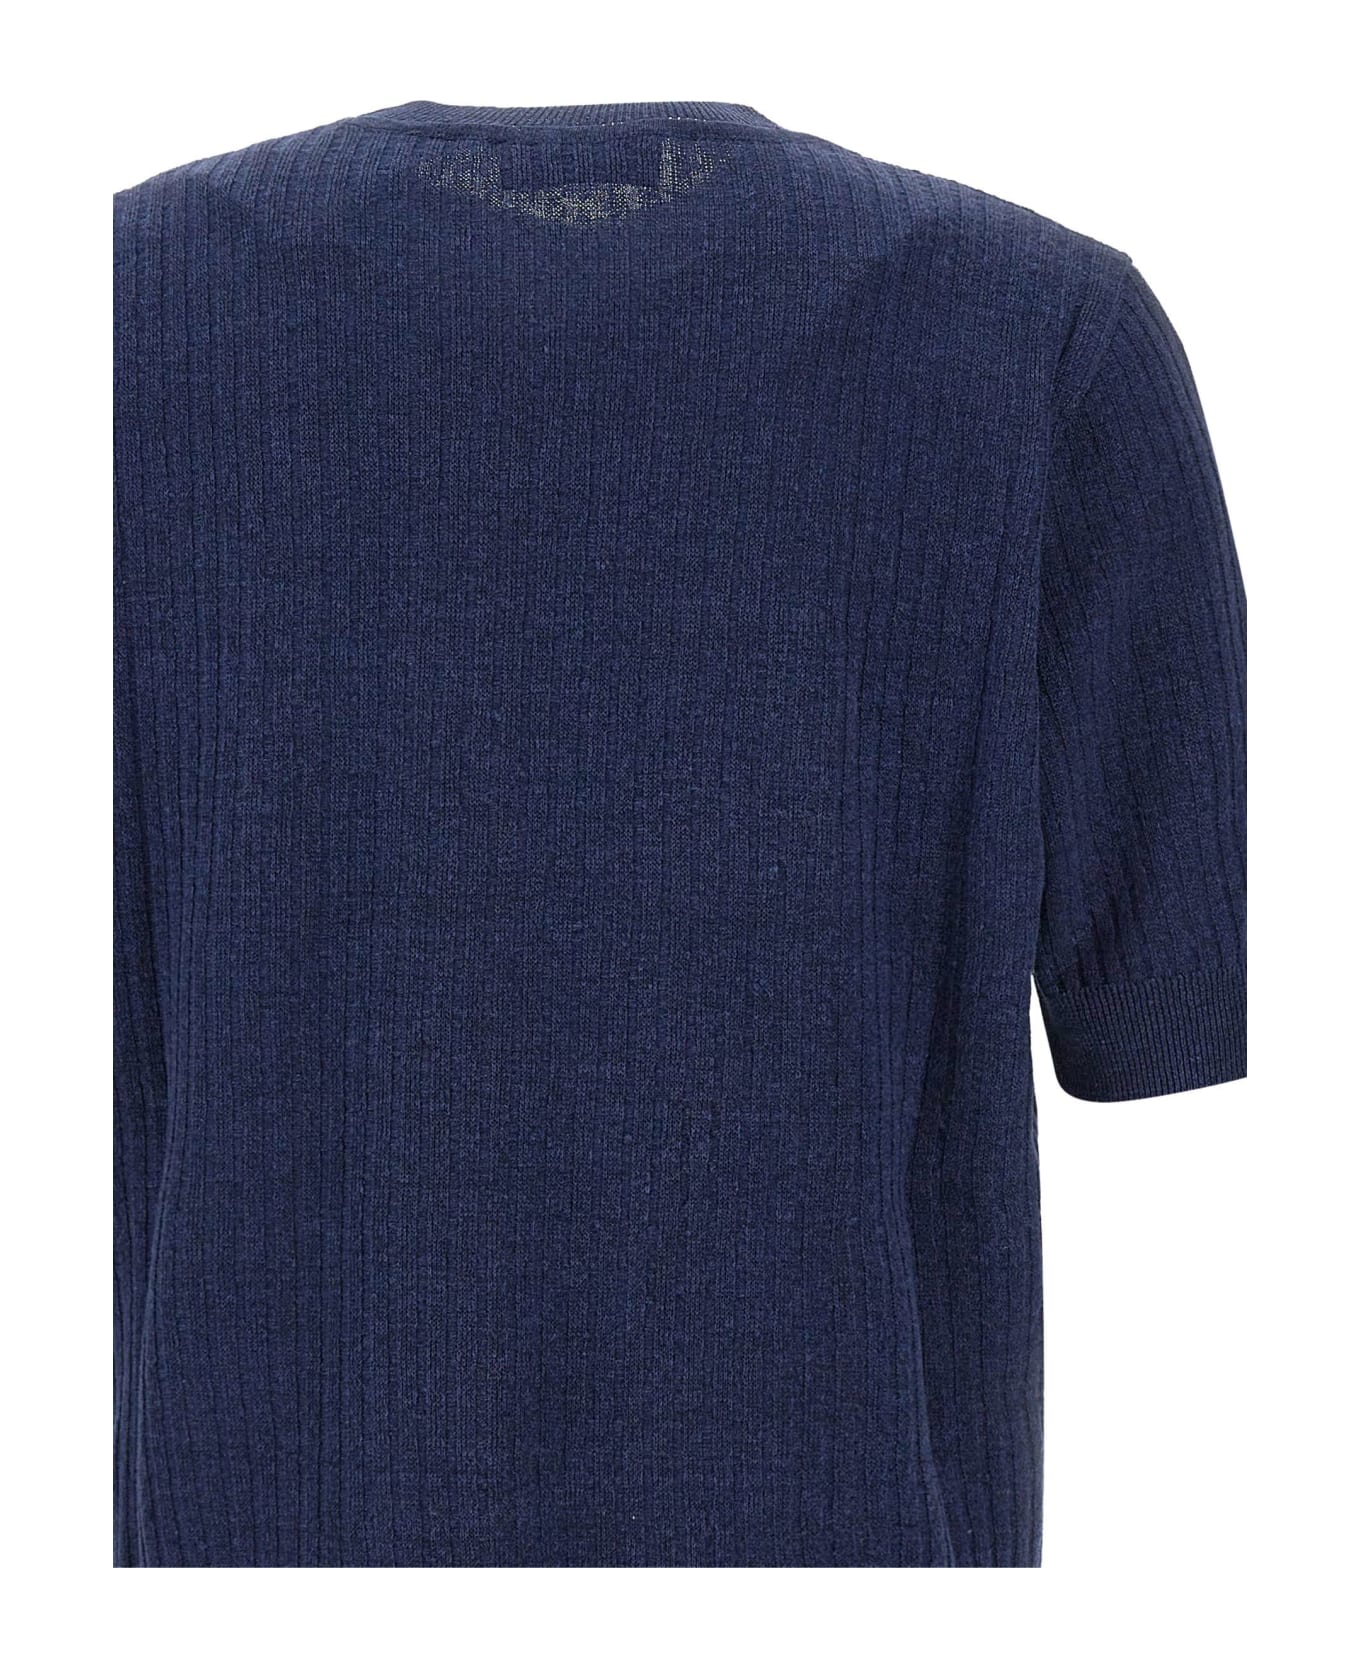 Lardini Linen And Cotton T-shirt - BLUE